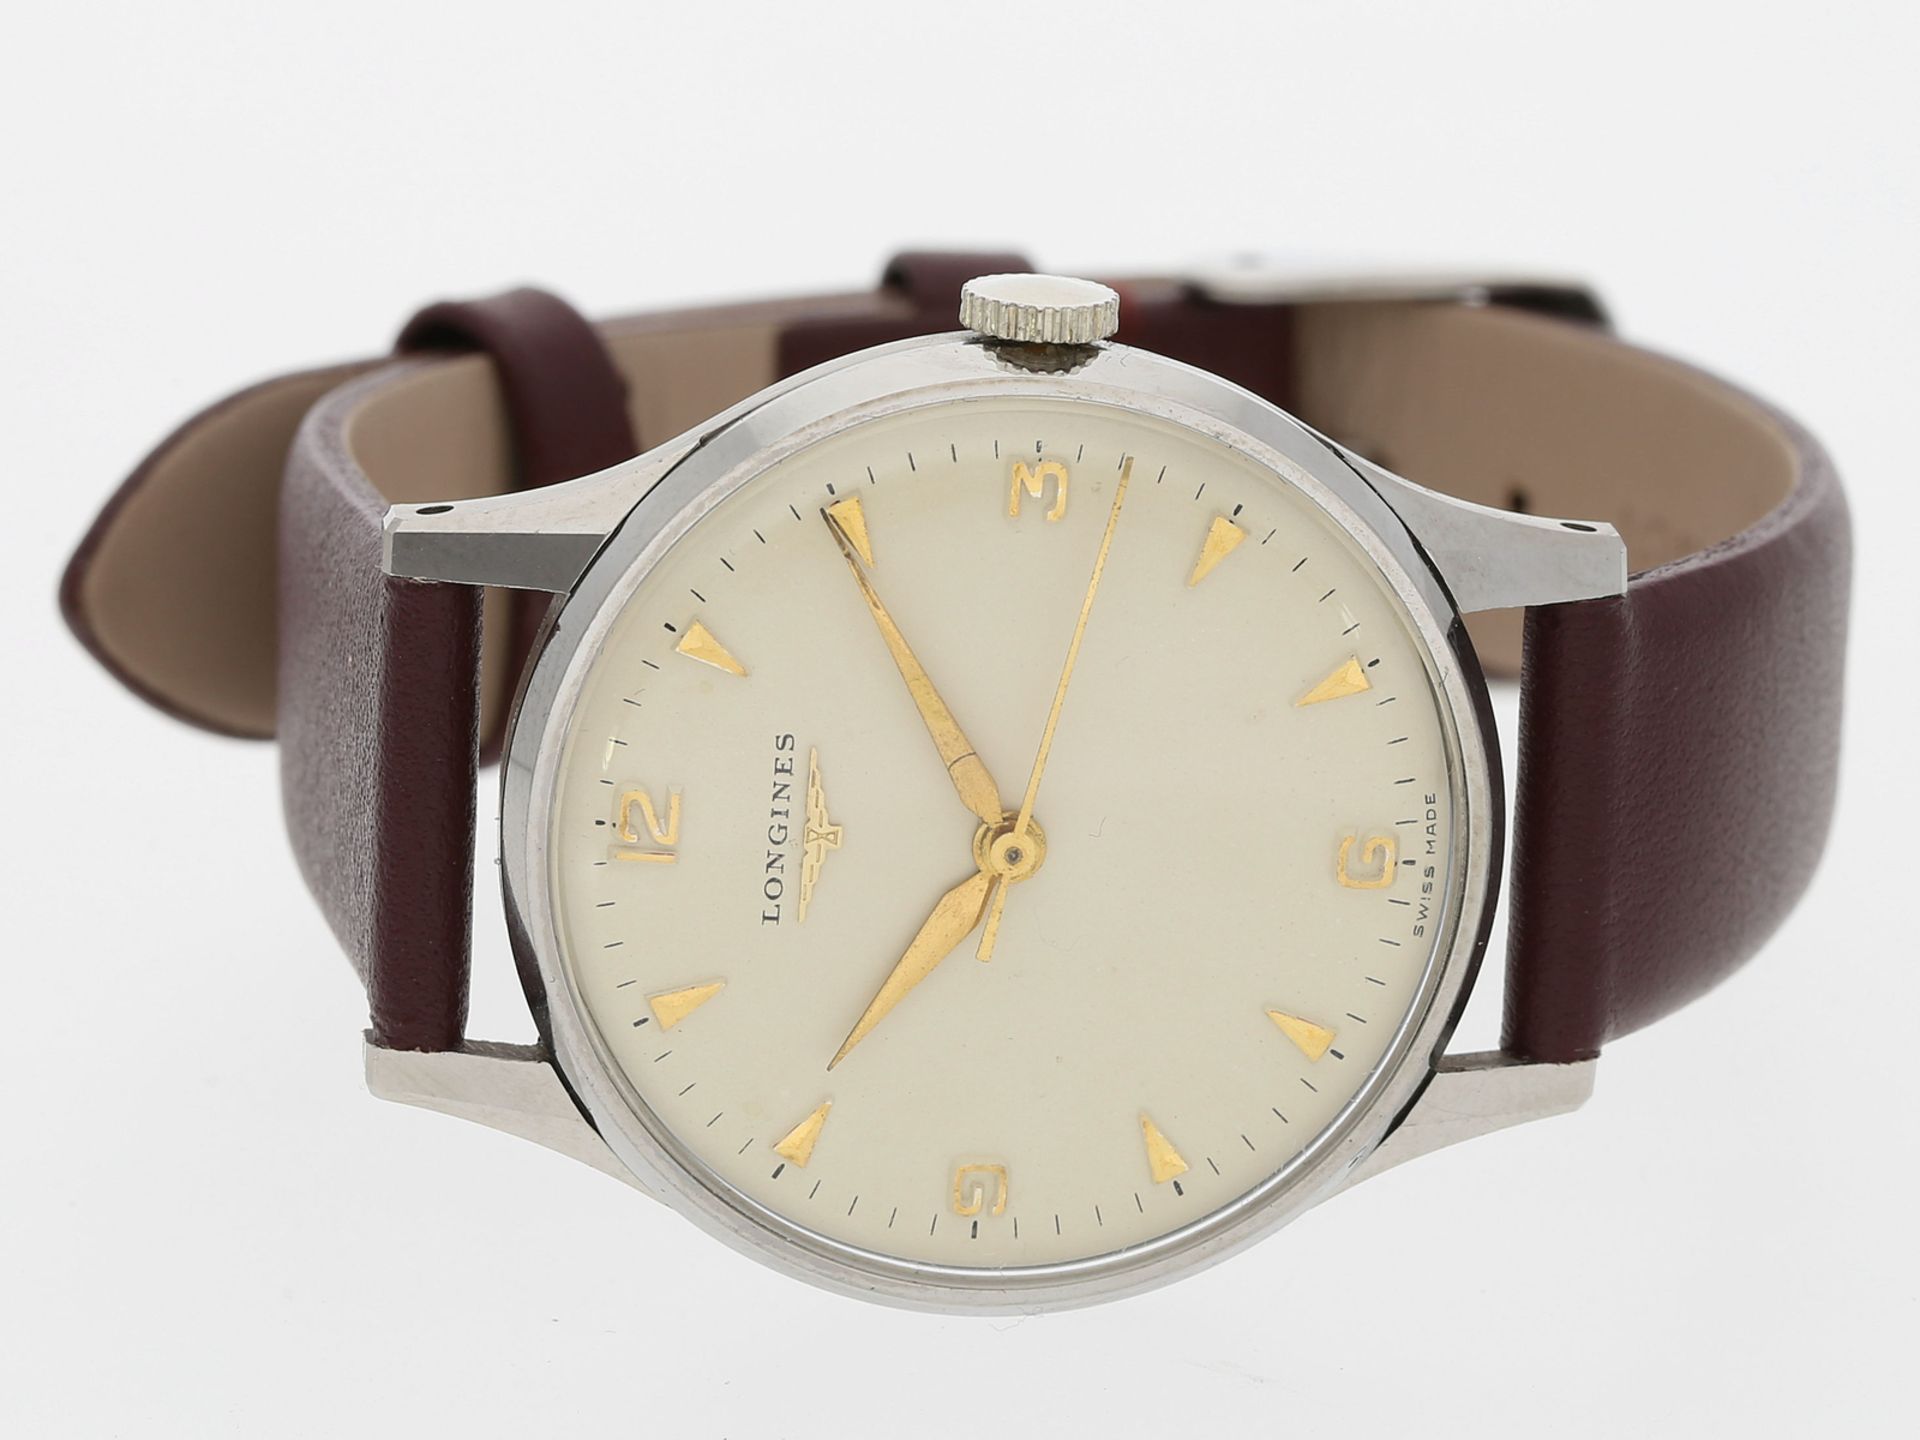 Armbanduhr: sehr schöne vintage Edelstahl Herrenarmbanduhr von Longines, Kaliber 27MS, 1950er-Jahre: